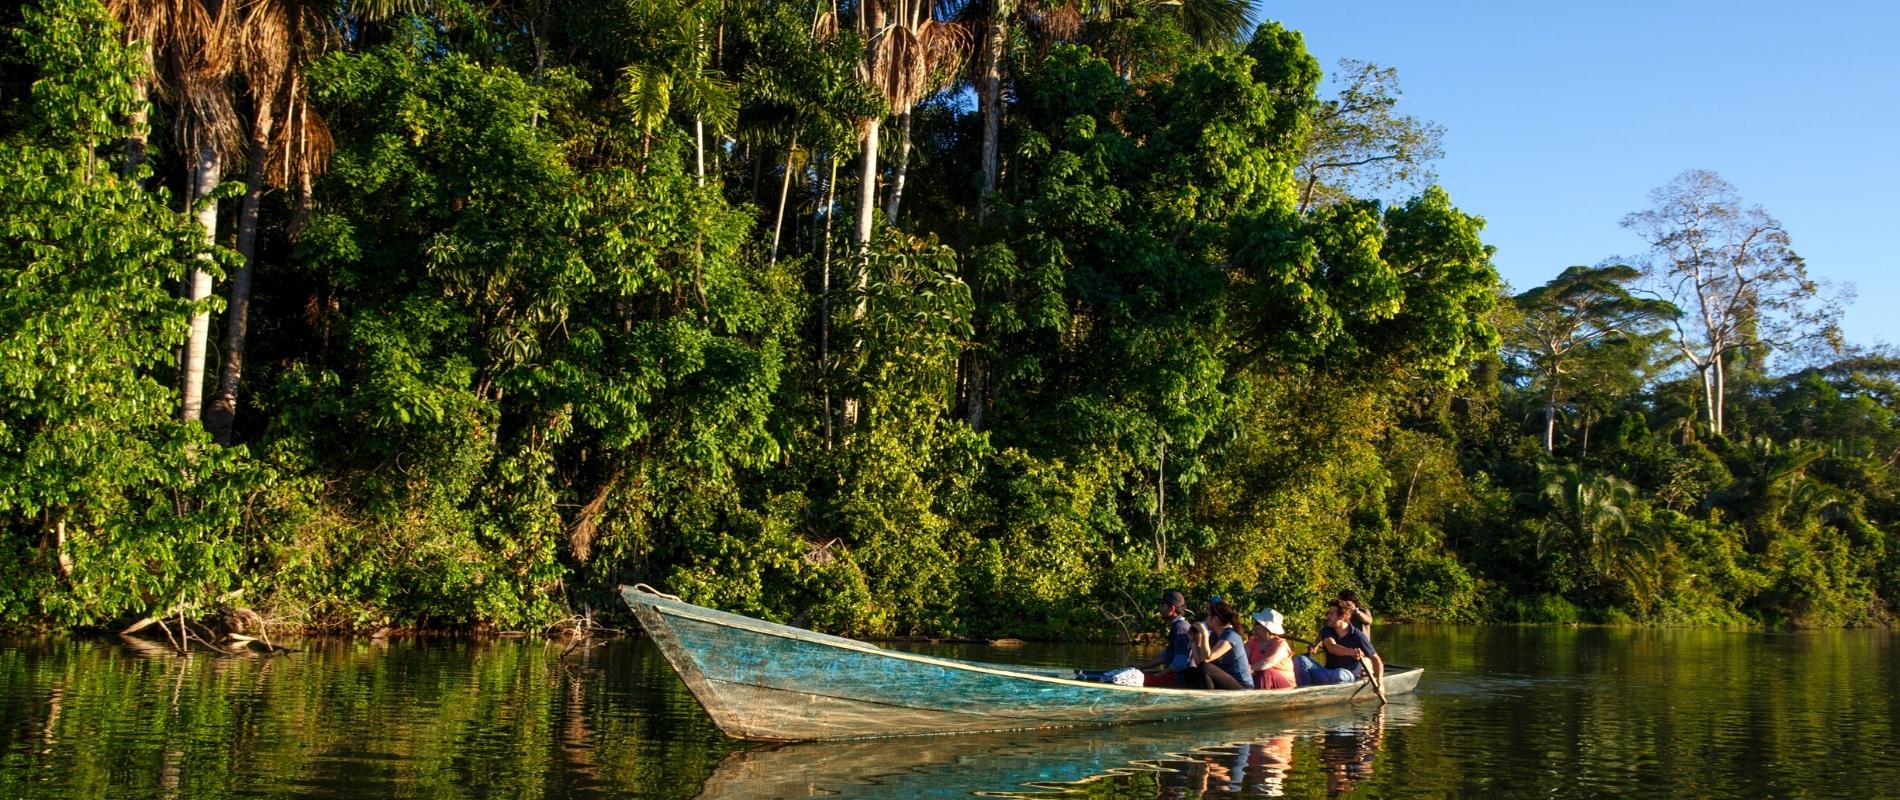 Tambopata Amazon Rainforest  4 Days | Inca Trail Expeditions